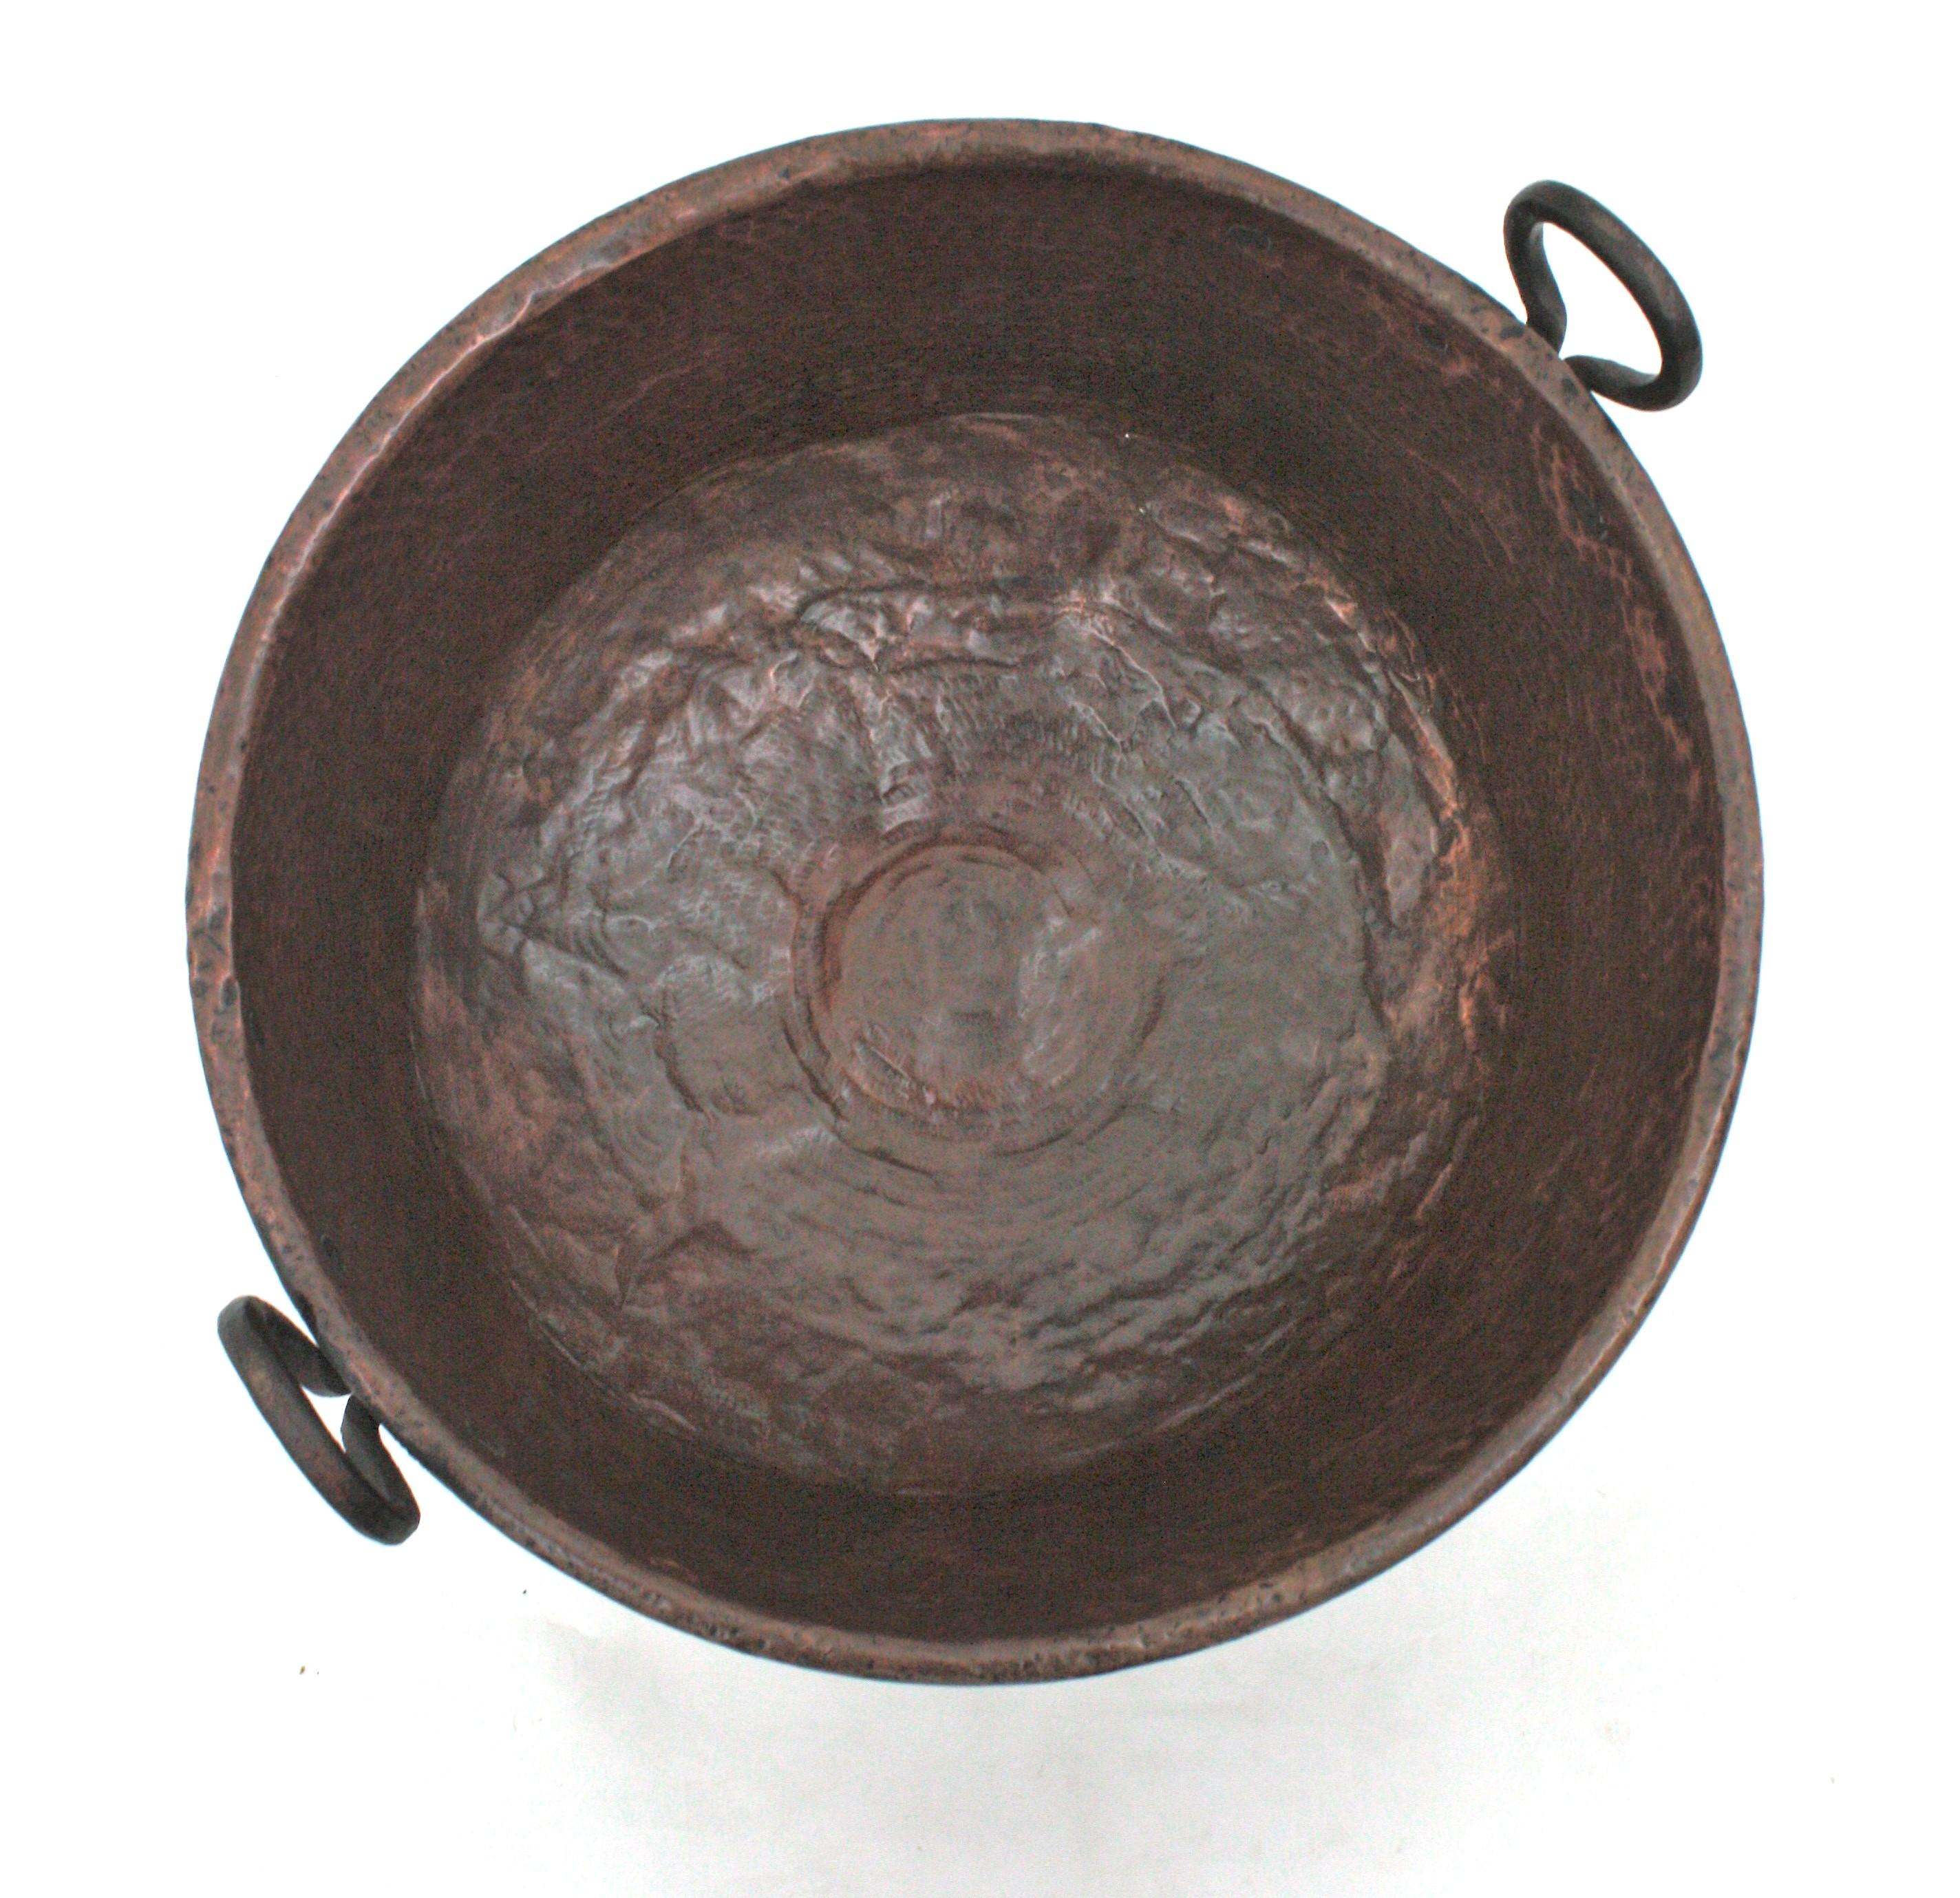 Massive Spanish Copper Cauldron with Iron Handles For Sale 13